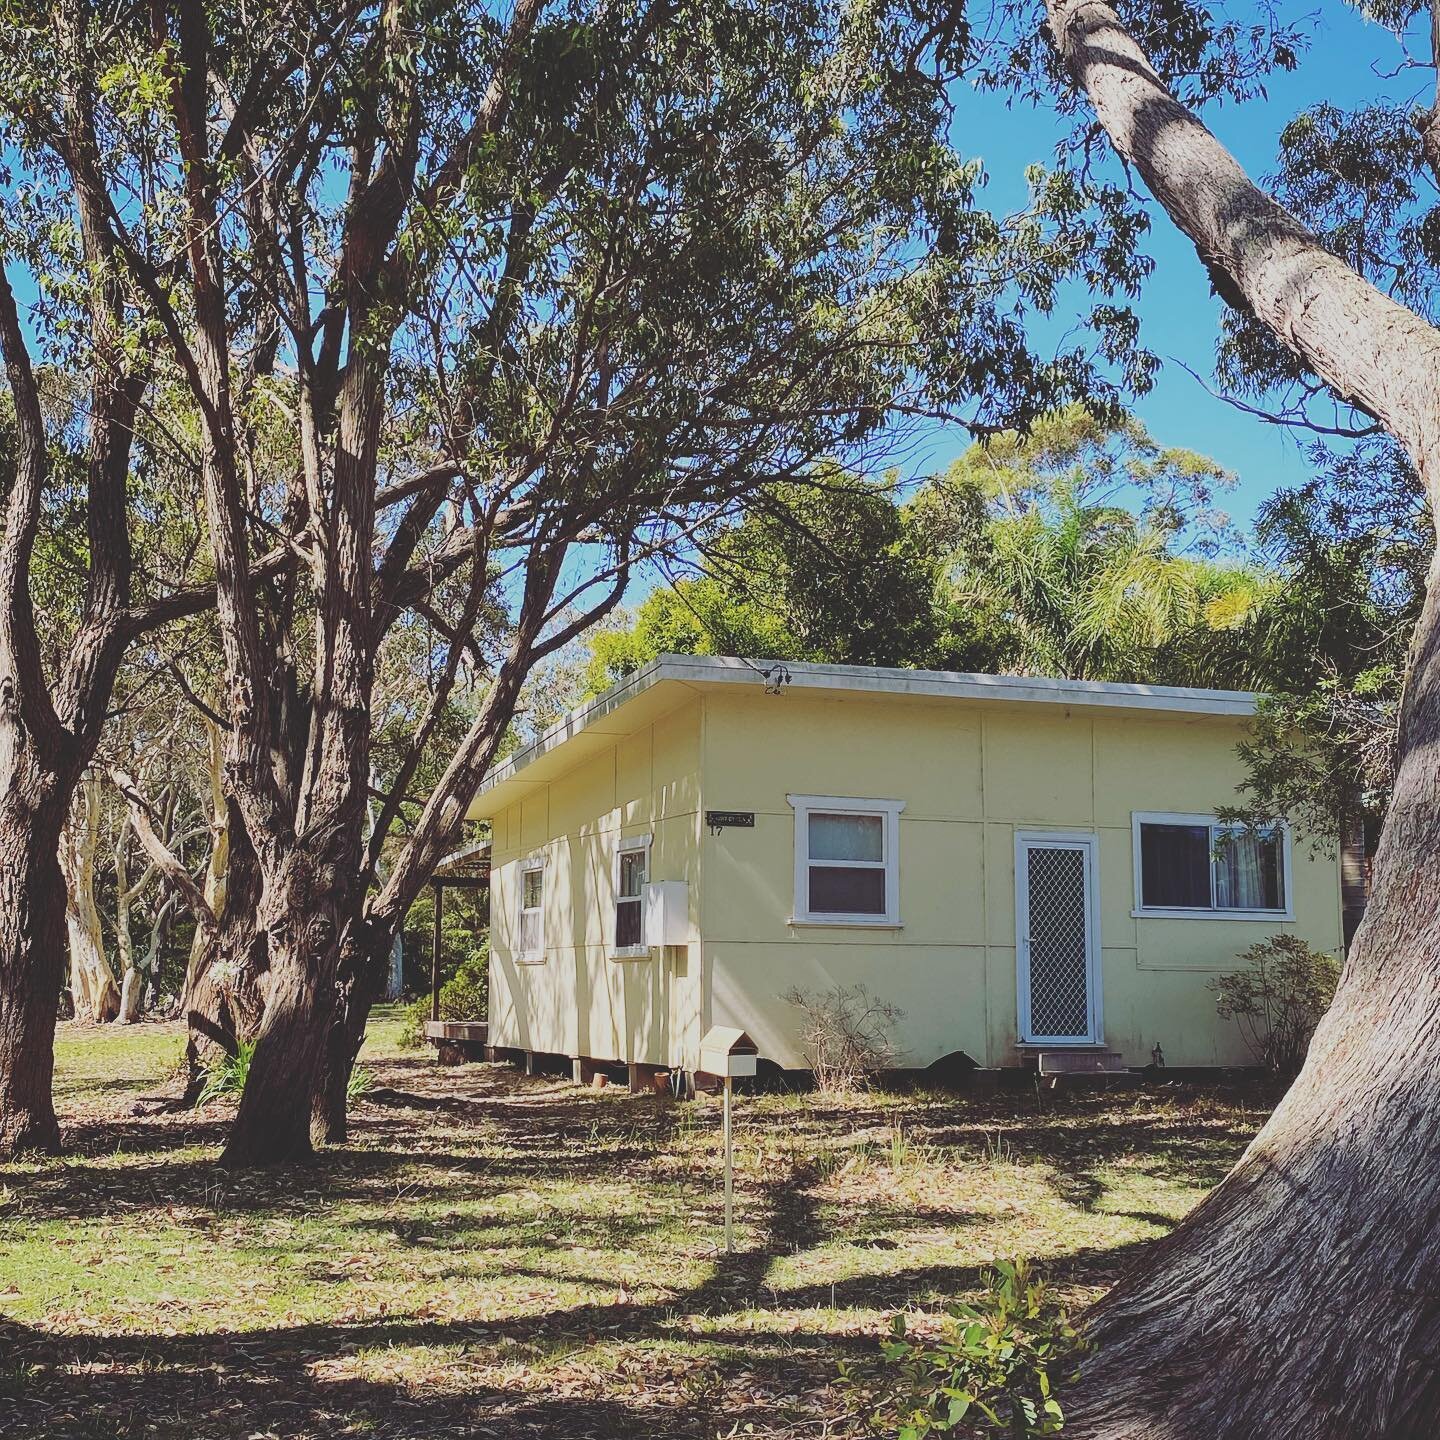 Winking face #architecture #australia #australiana #beachshack #cottage #facade #house #lemon #pastel #shack #southcoast #suburban #trees #yellow